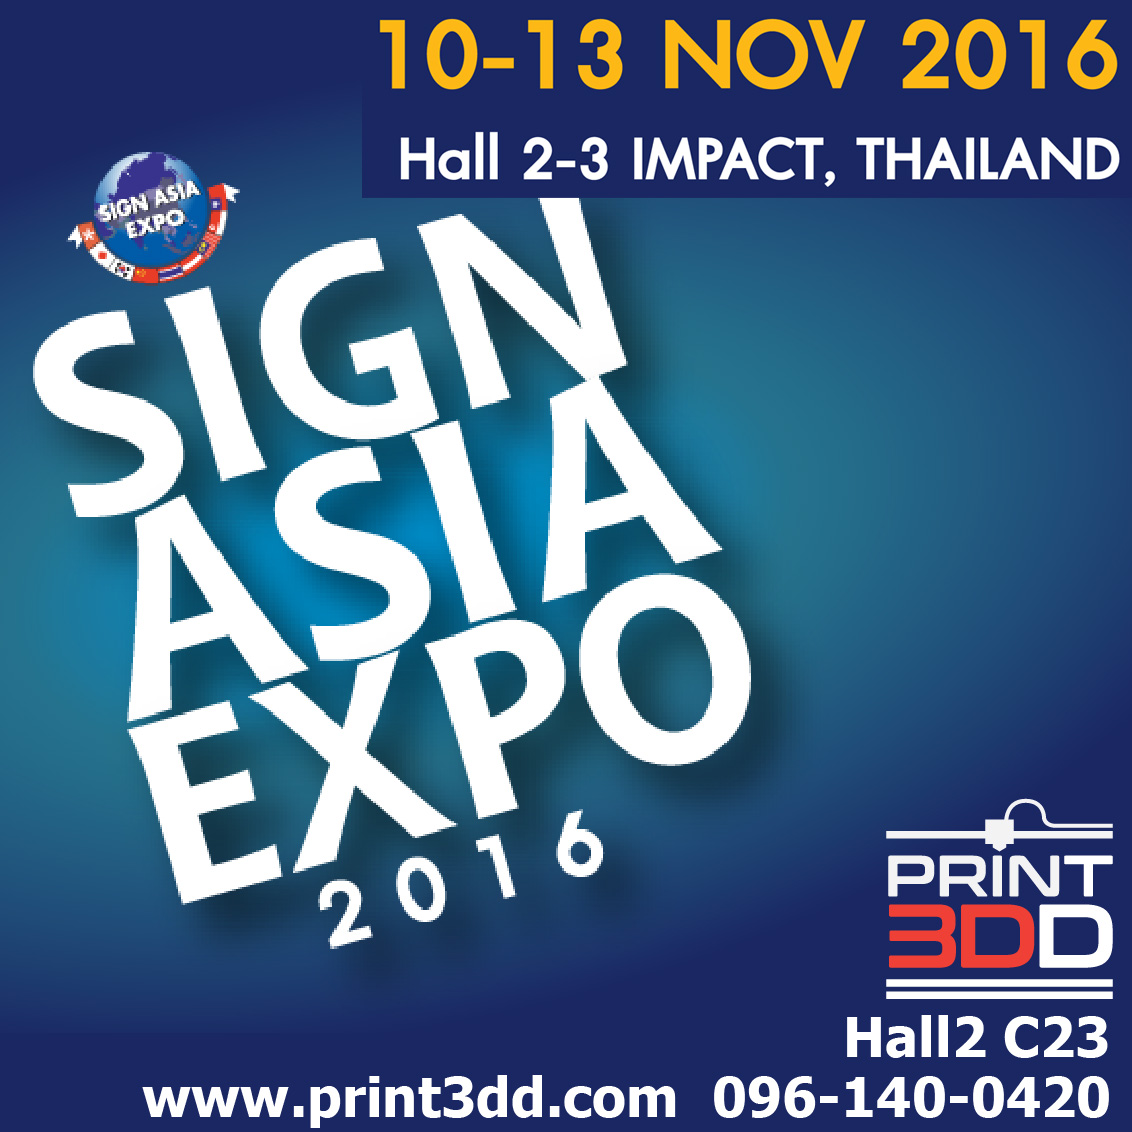 Sign Asia Expo16 เจอกับ Print3dd ที่ Impact เมืองทอง 10-13พย.นี้